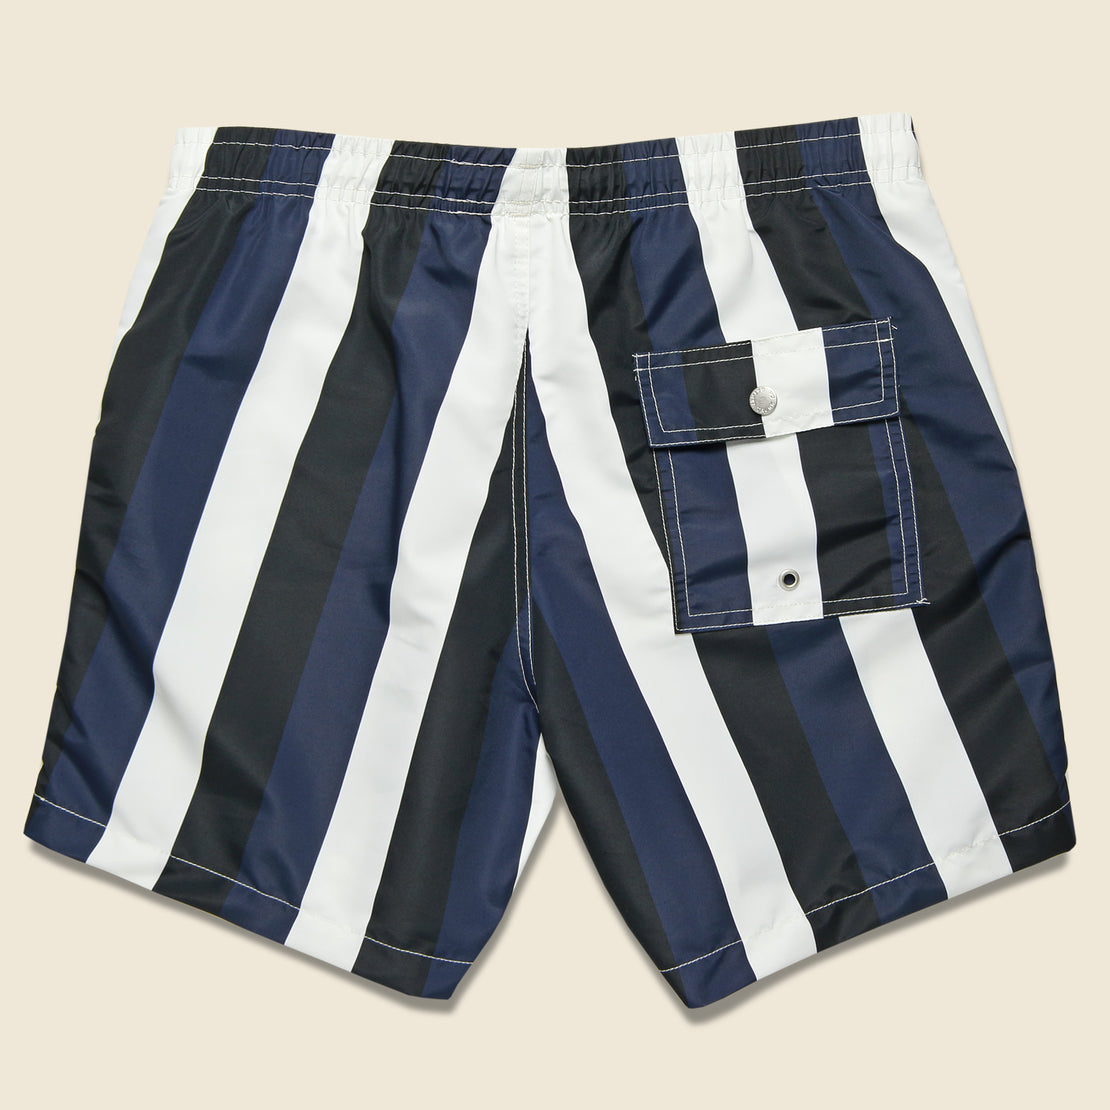 Striped Swim Trunk - Blue/Black - Bather Trunk Co. - STAG Provisions - Shorts - Swim